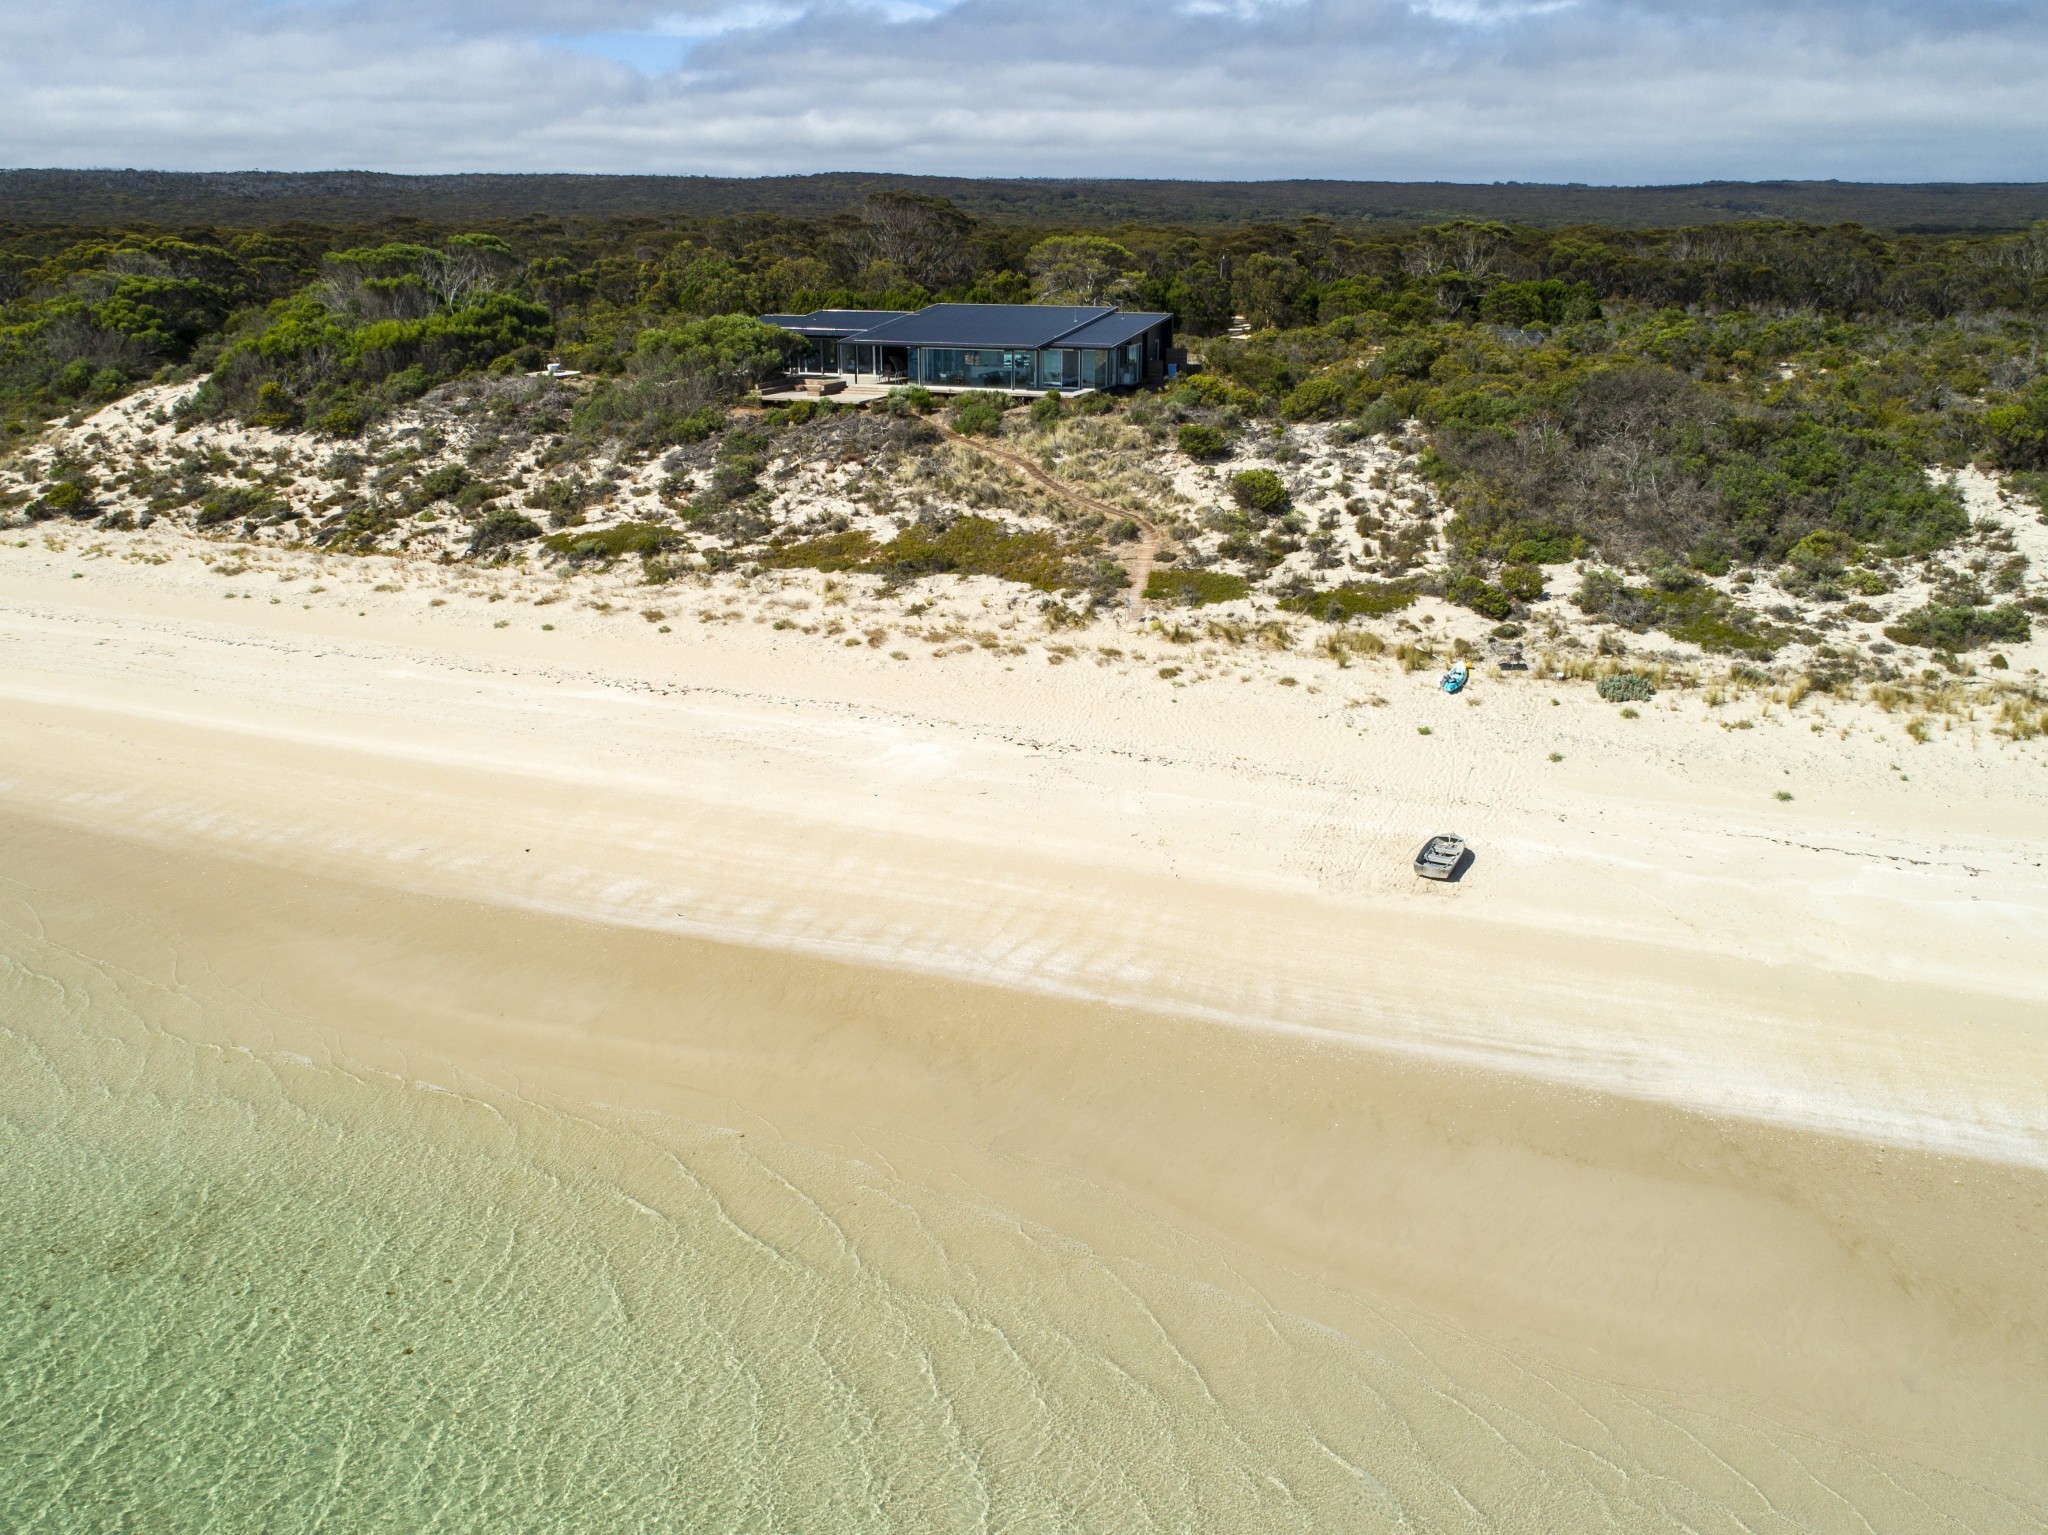 One Kangaroo Island beachside exclusive-use private villa on Kangaroo Island